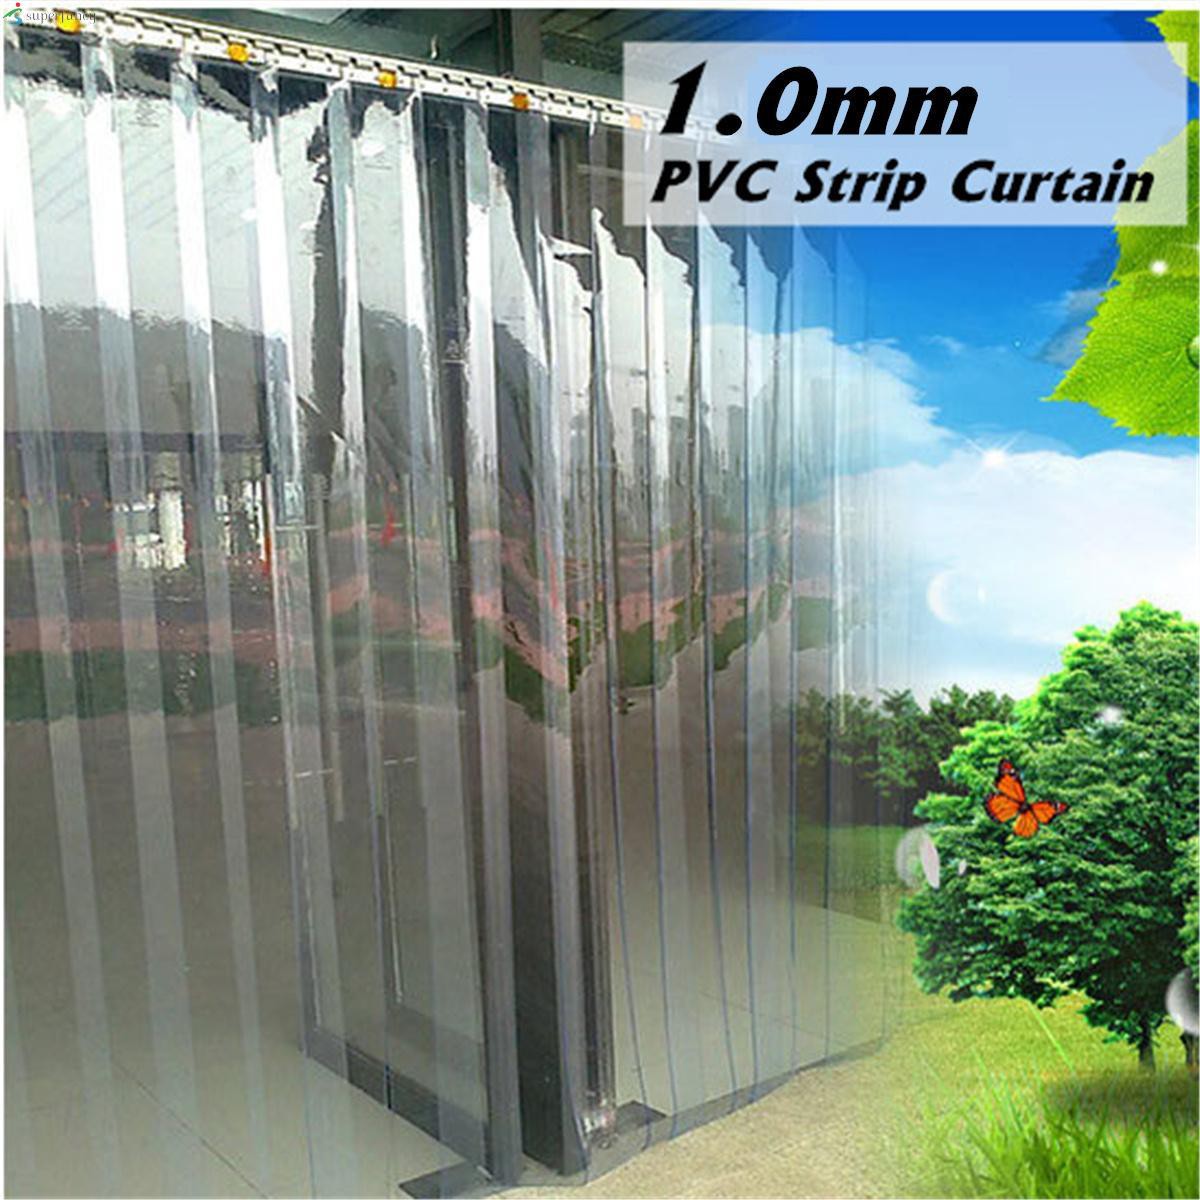 Freezer Room PVC Strip Curtain / Door Strip Kit + hanging rail - 2M X 0.18CM New#Only a single strip aircon